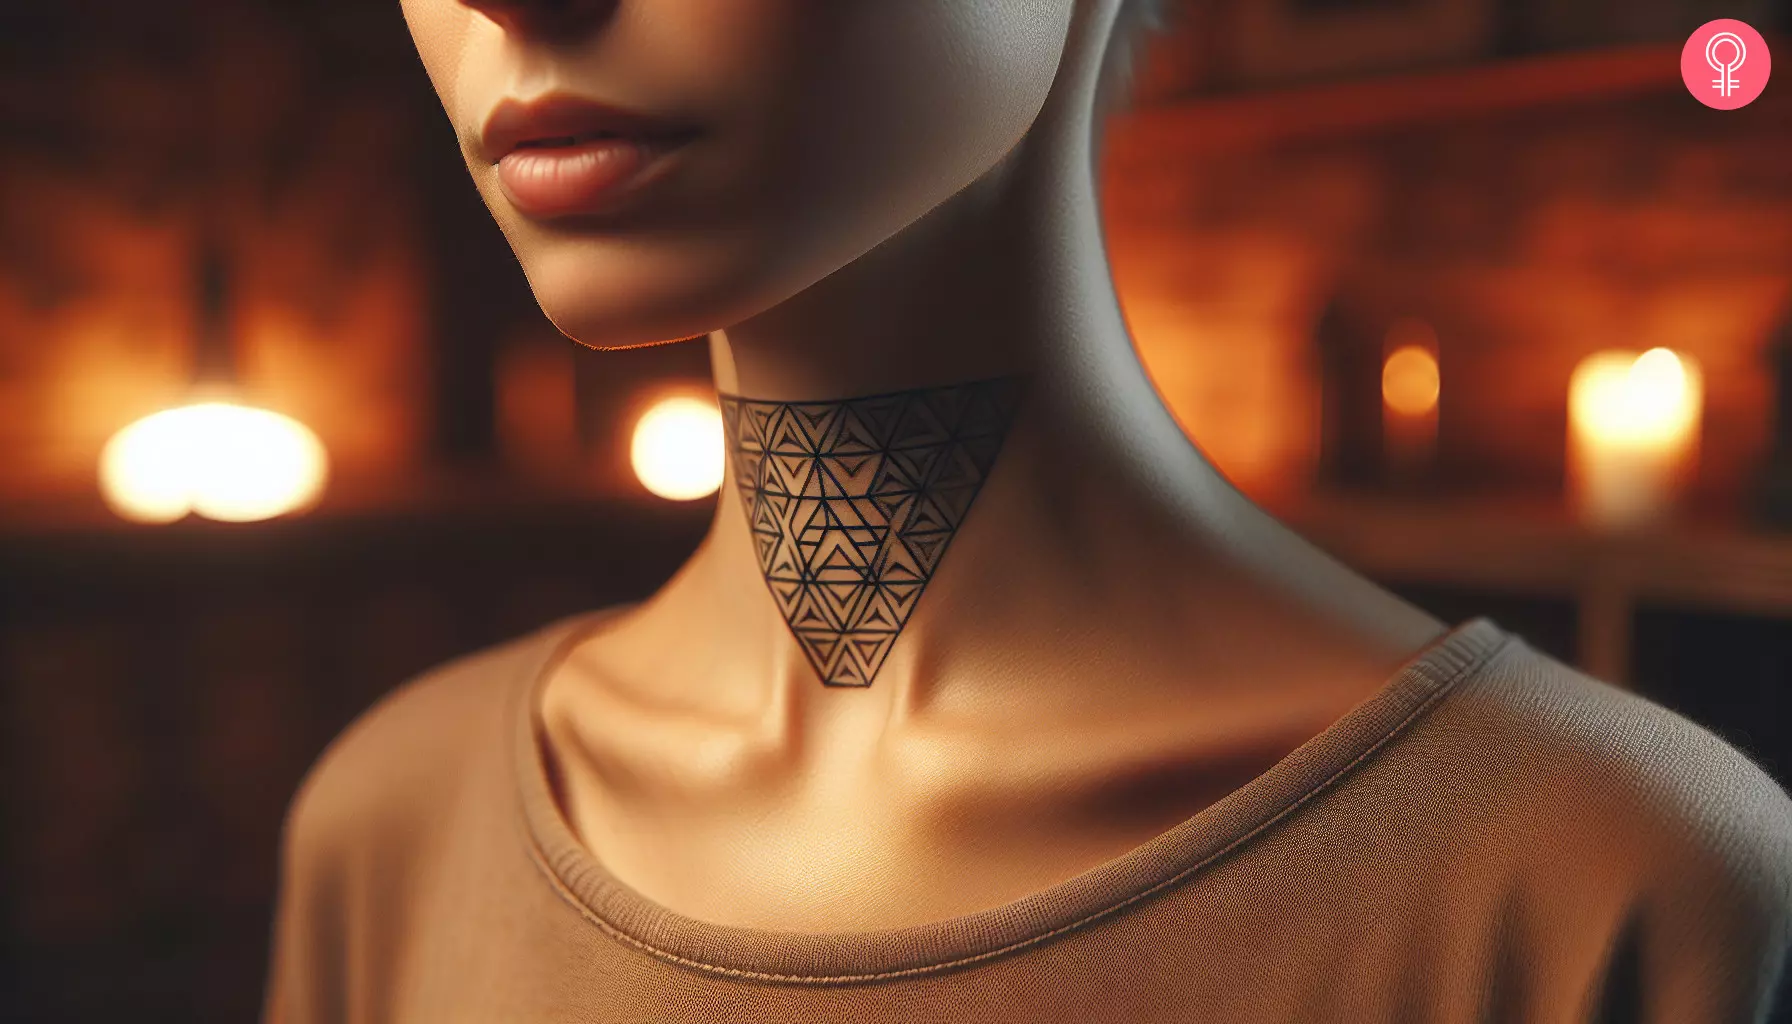 A woman with a geometric throat tattoo